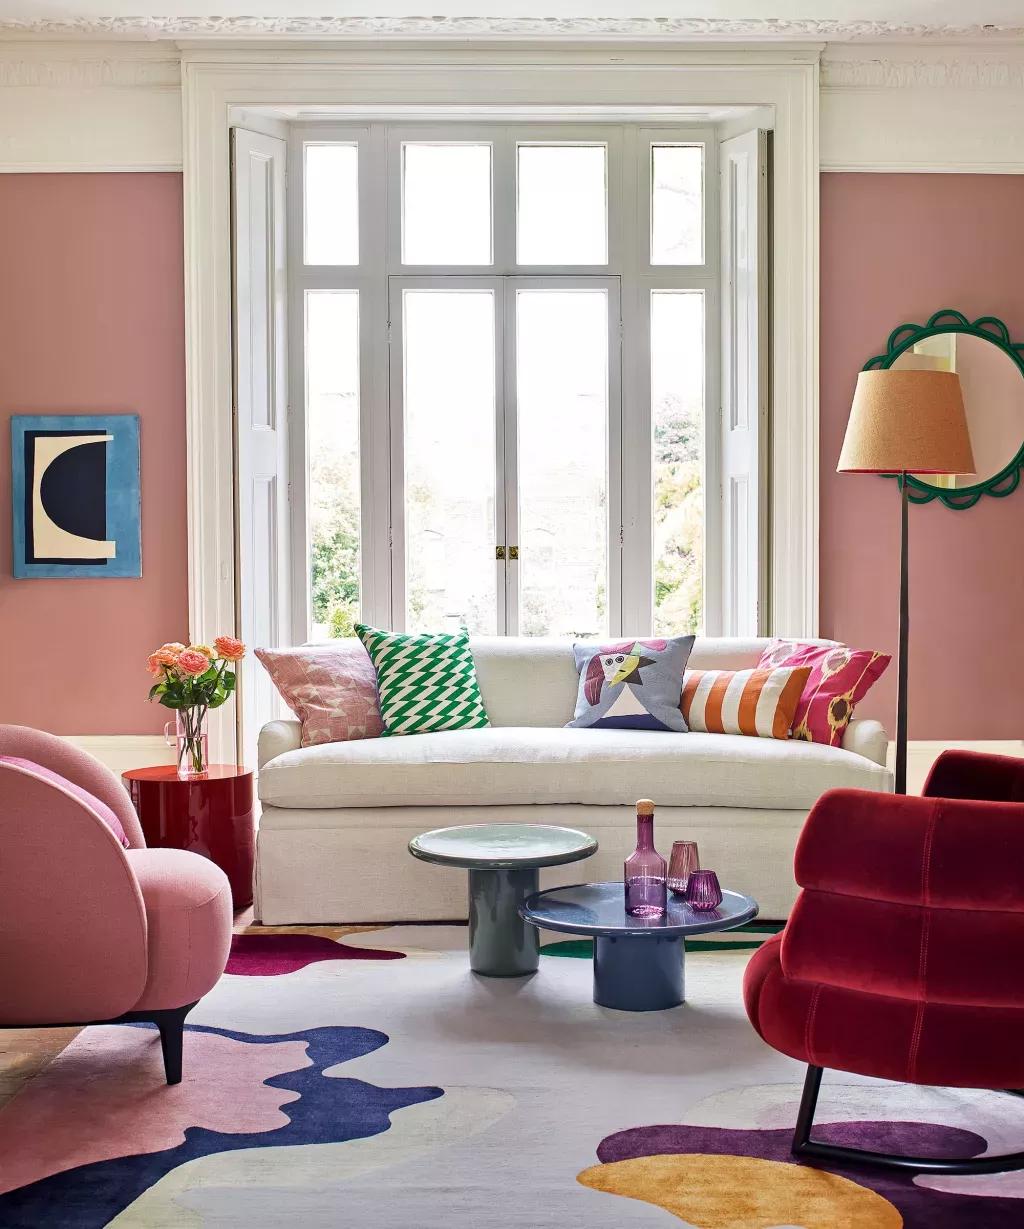 Family room paint ideas – 10 best paint colors for informal living spaces 